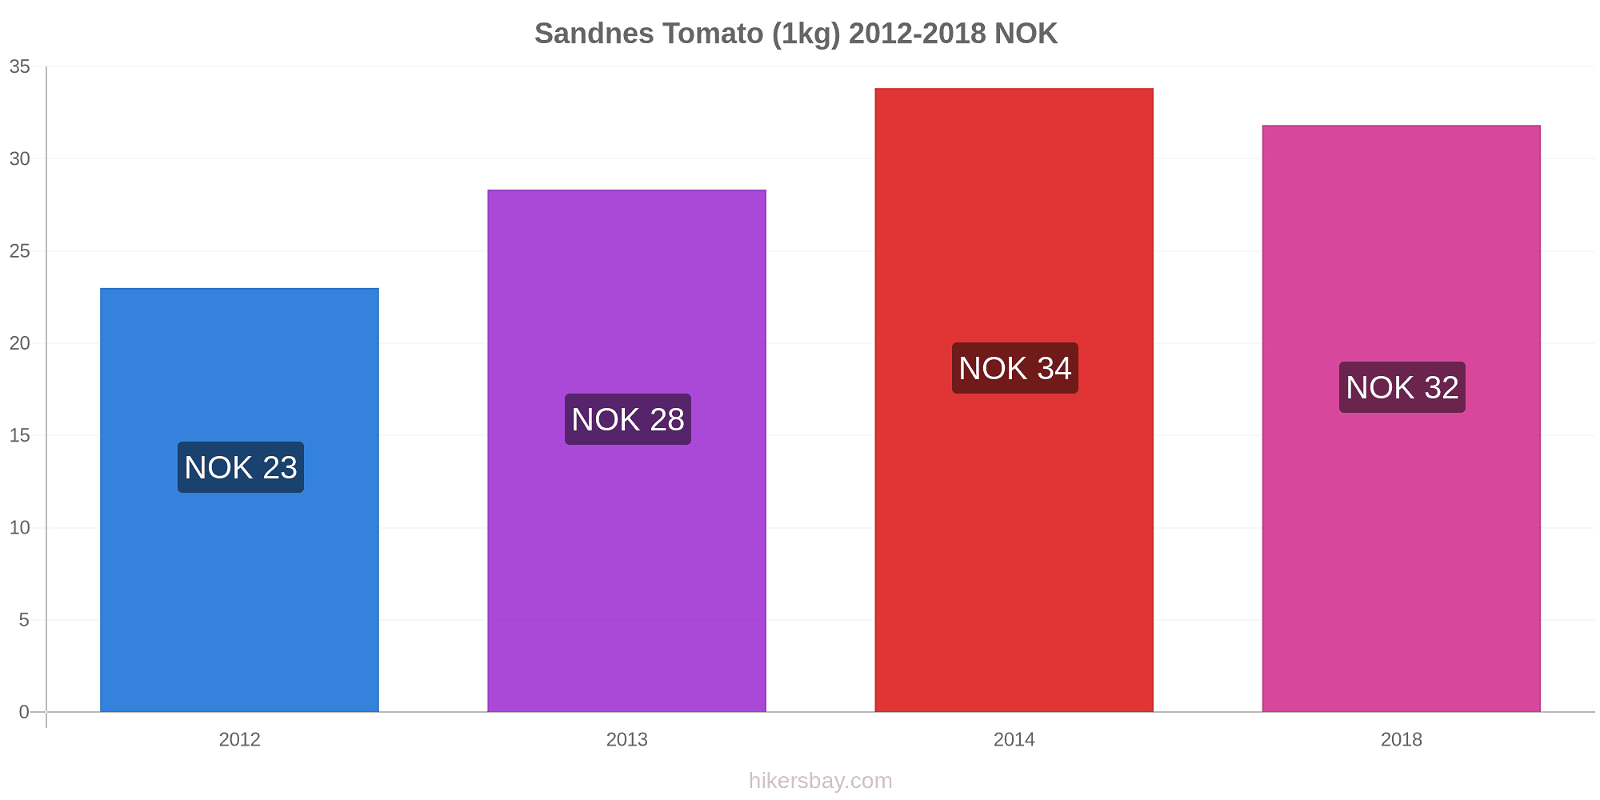 Sandnes price changes Tomato (1kg) hikersbay.com